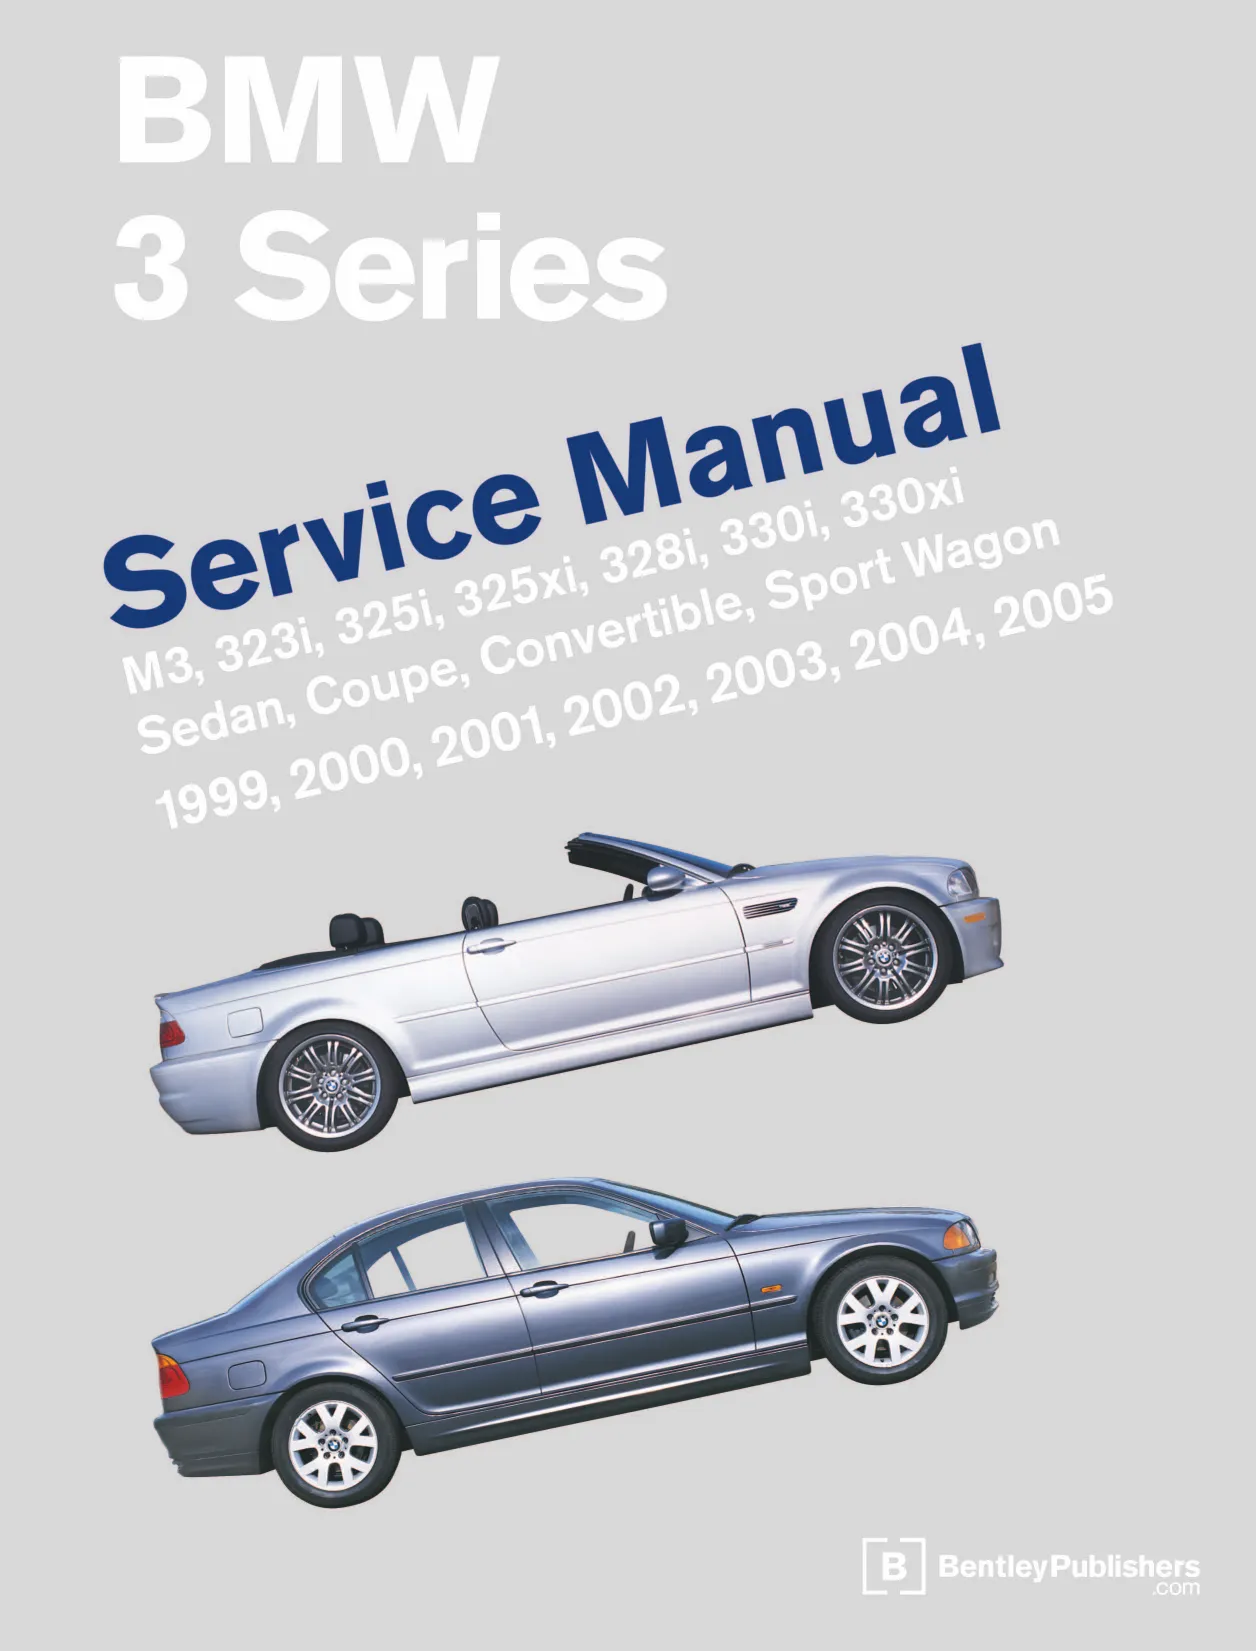 1999-2005 BMW E46 323i, 325i, 325xi, 328i, 330i, 330xi service manual